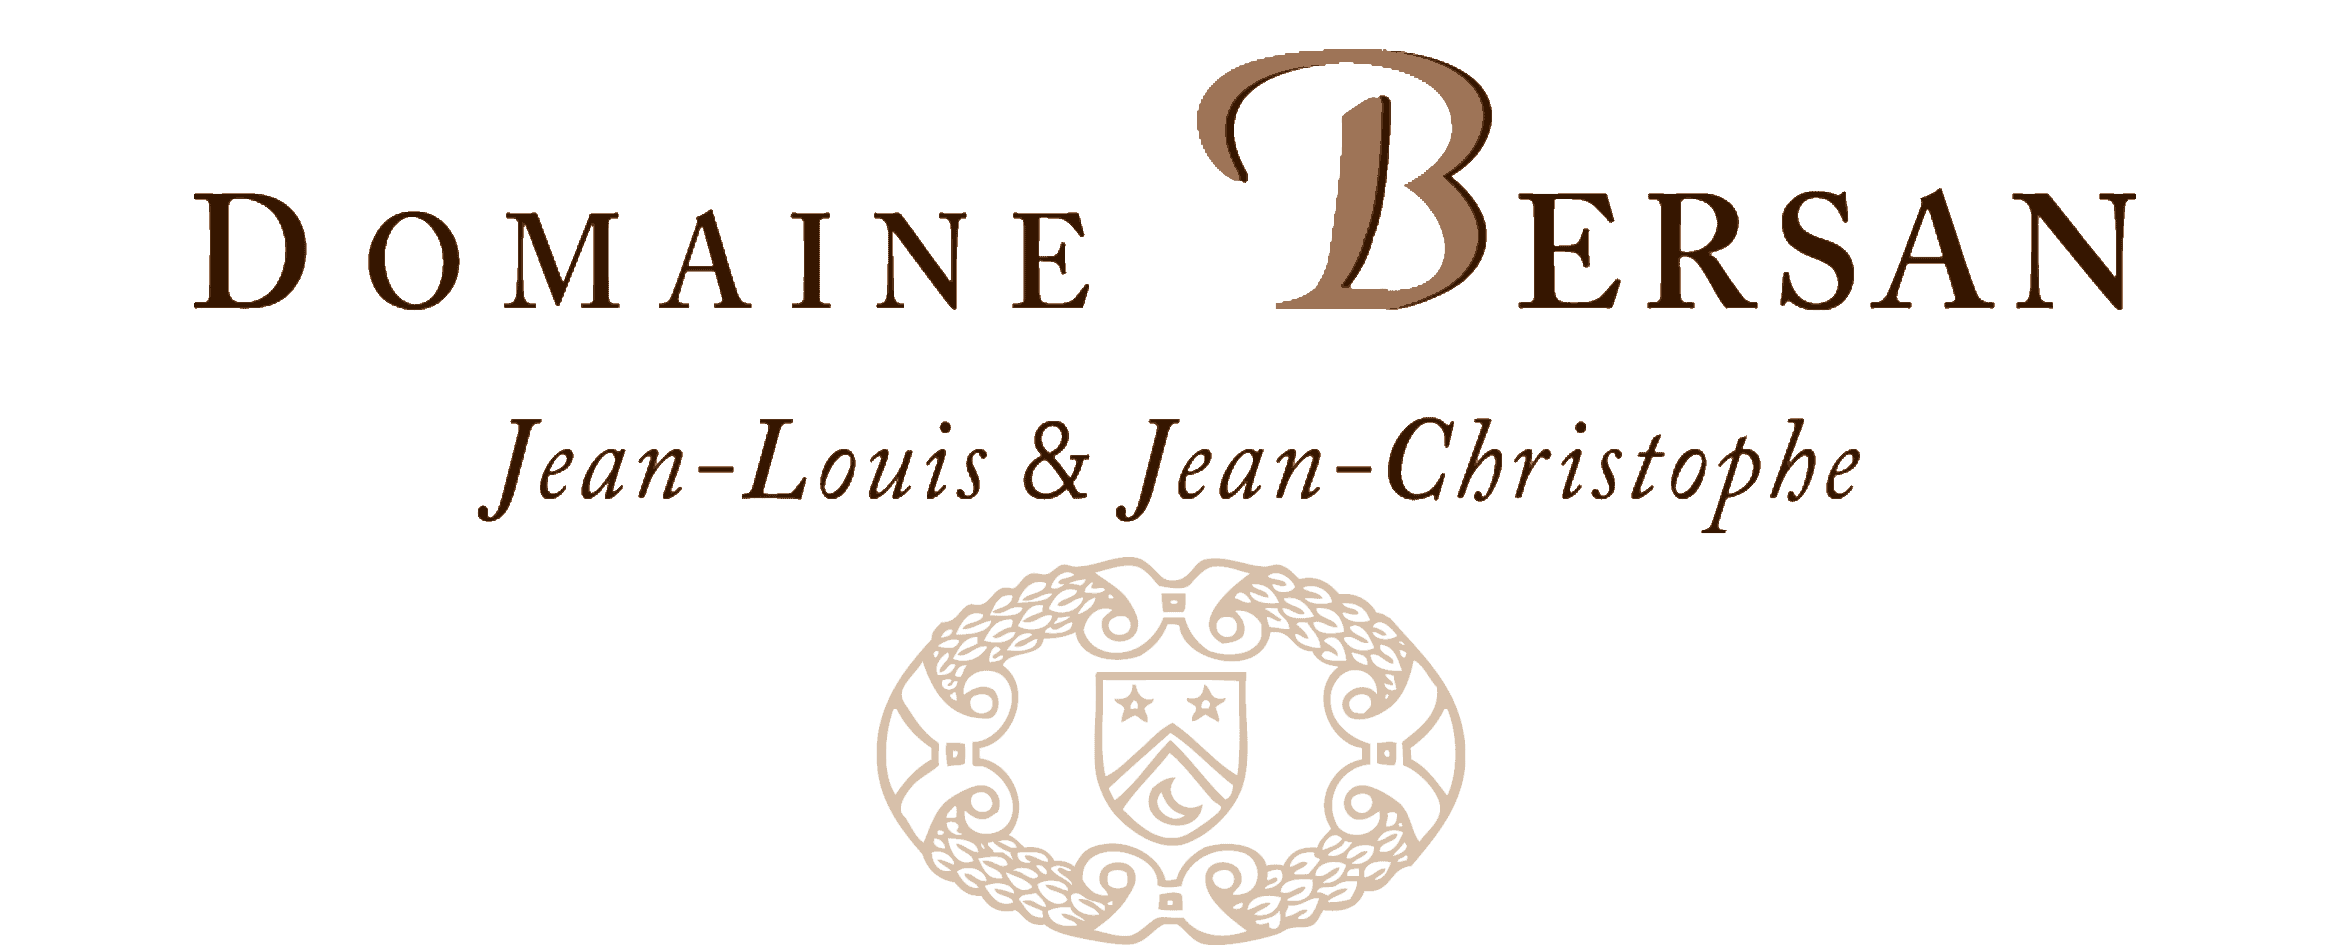 Domaine Bersan Jean-Louis et Jean-Christophe